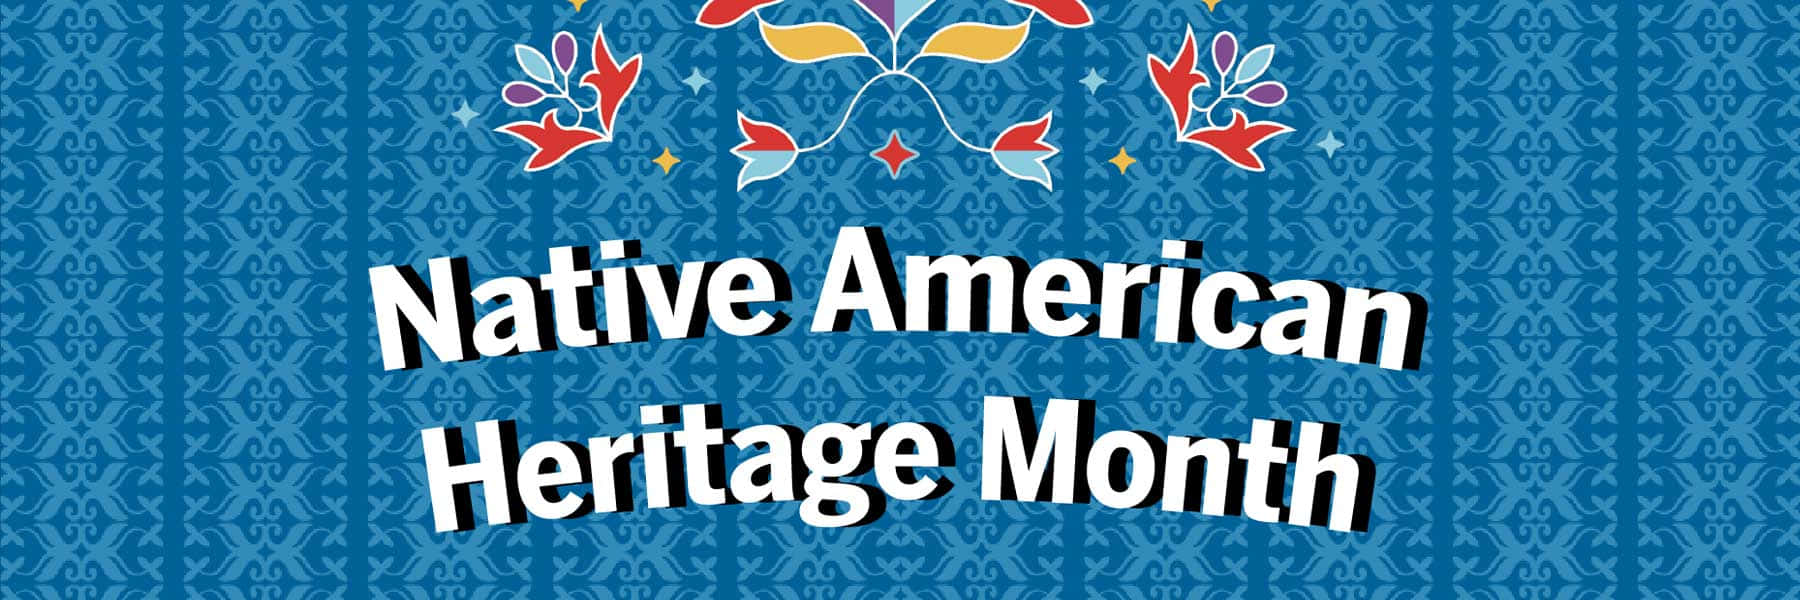 Celebrating Native American Heritage Month Wallpaper